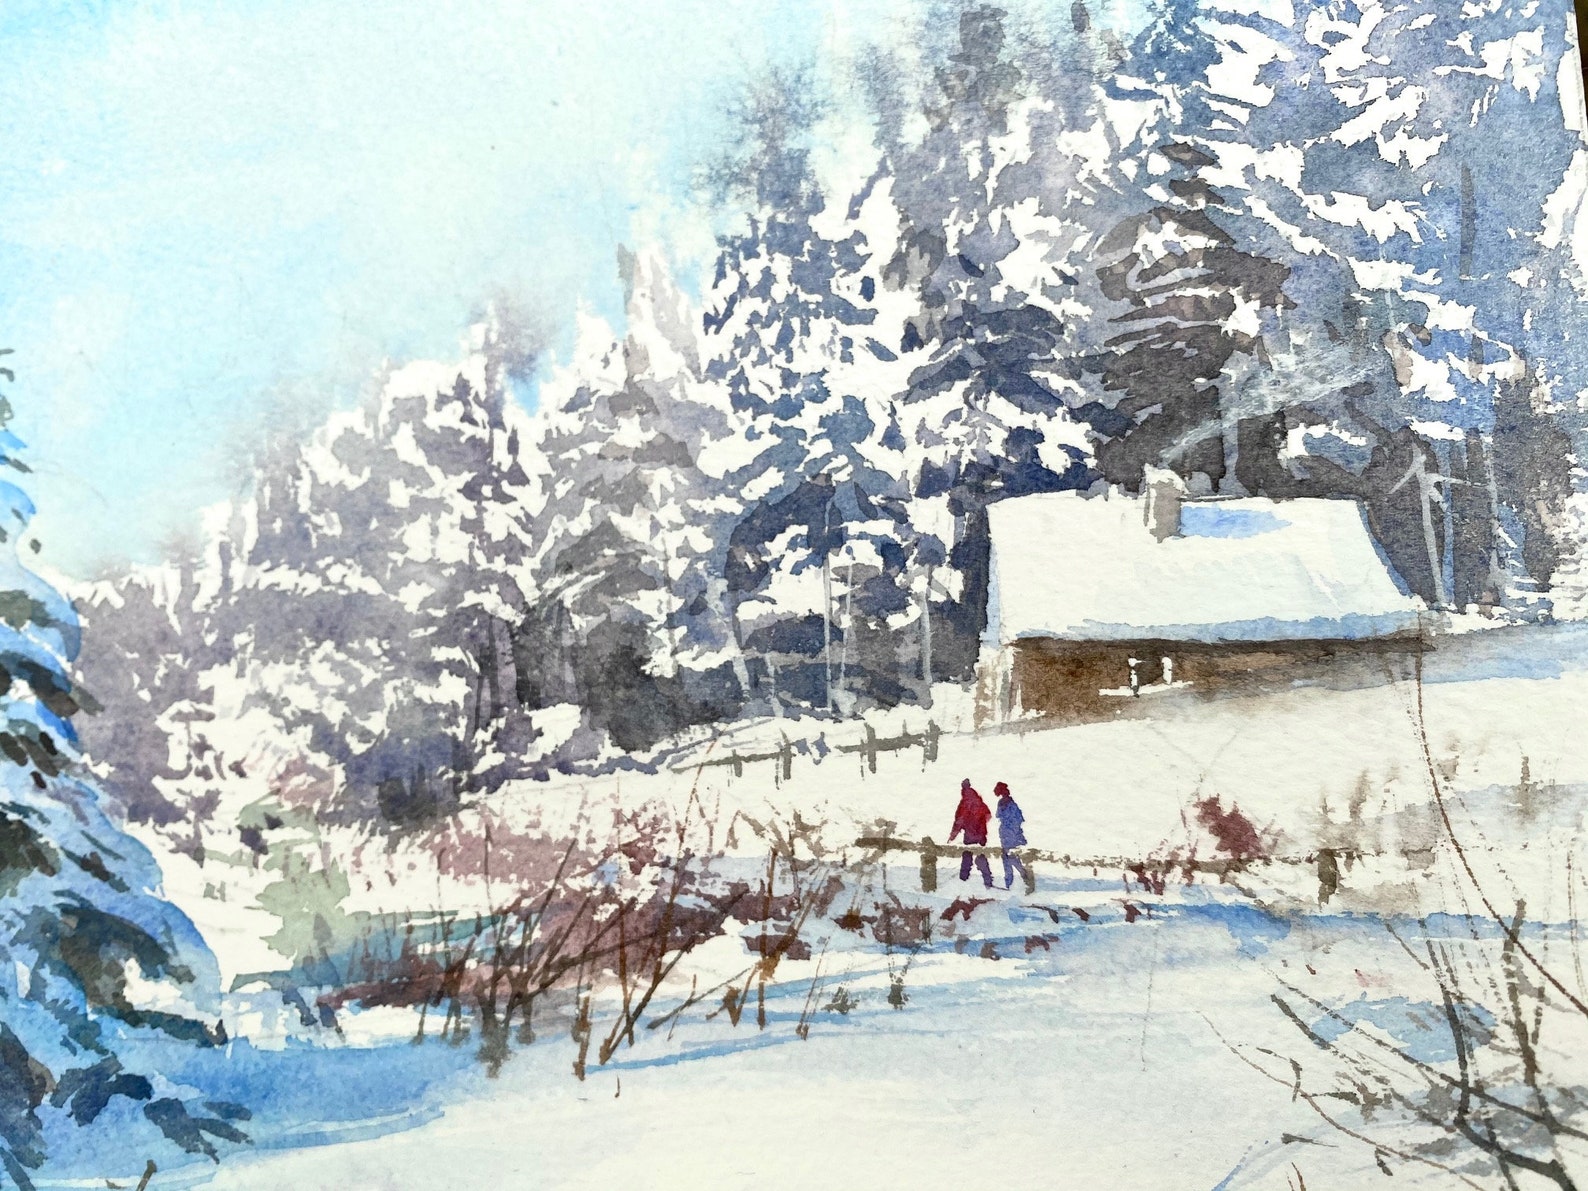 Snowy Painting Farm House Original Watercolor Winter Scene | Etsy